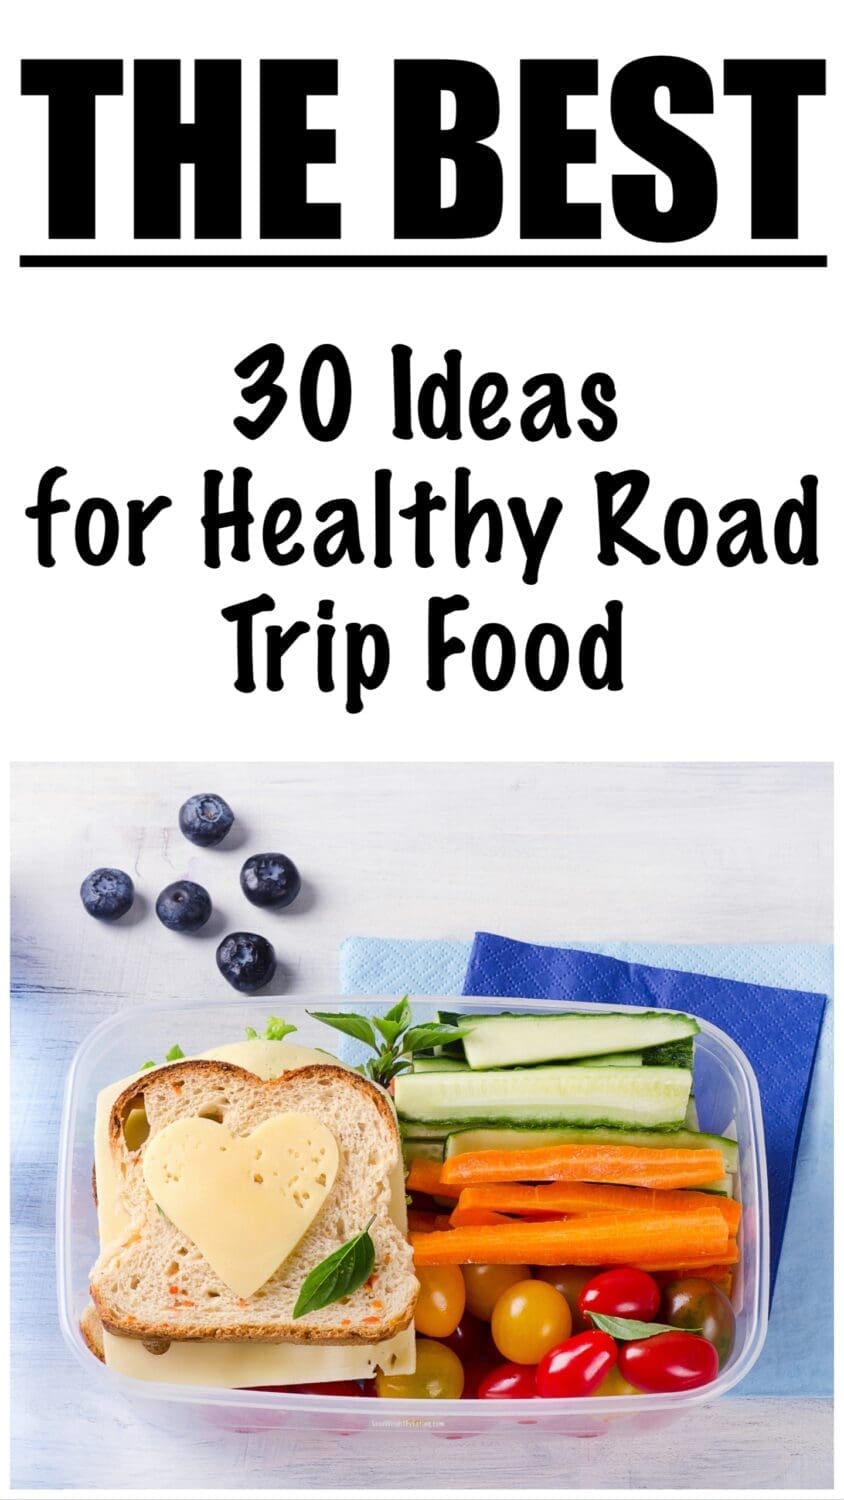 30 Ideas for Healthy Road Trip Food